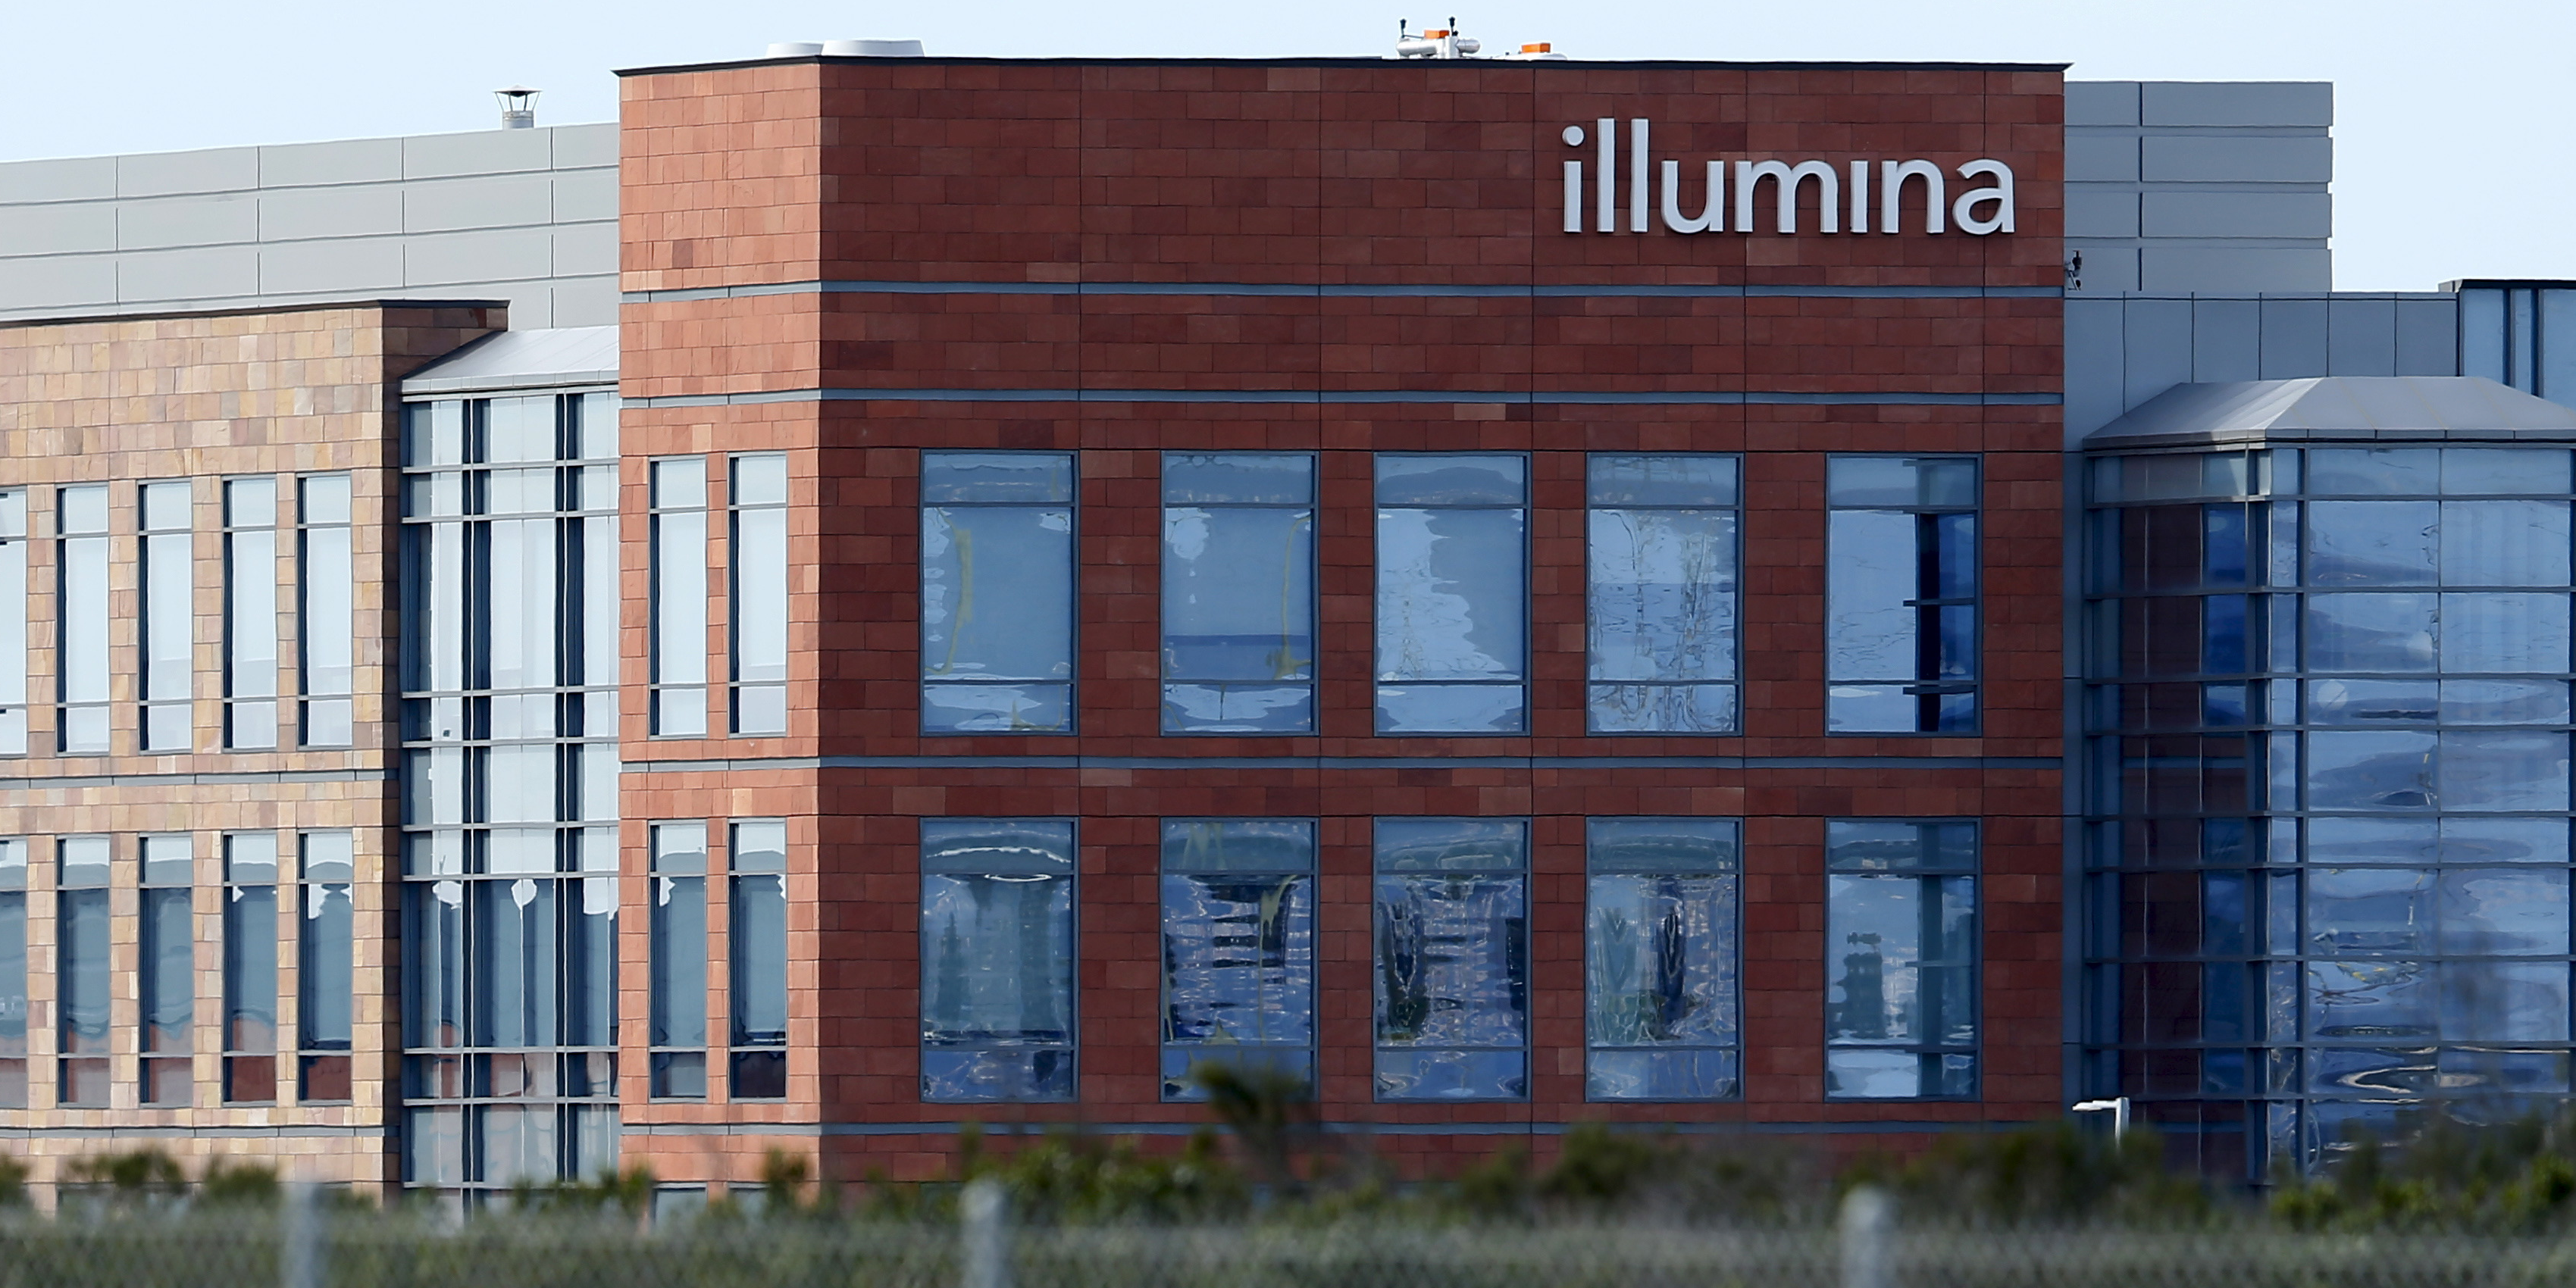 Illumina expresses plans of acquiring Grail Inc. for £6.25 billion